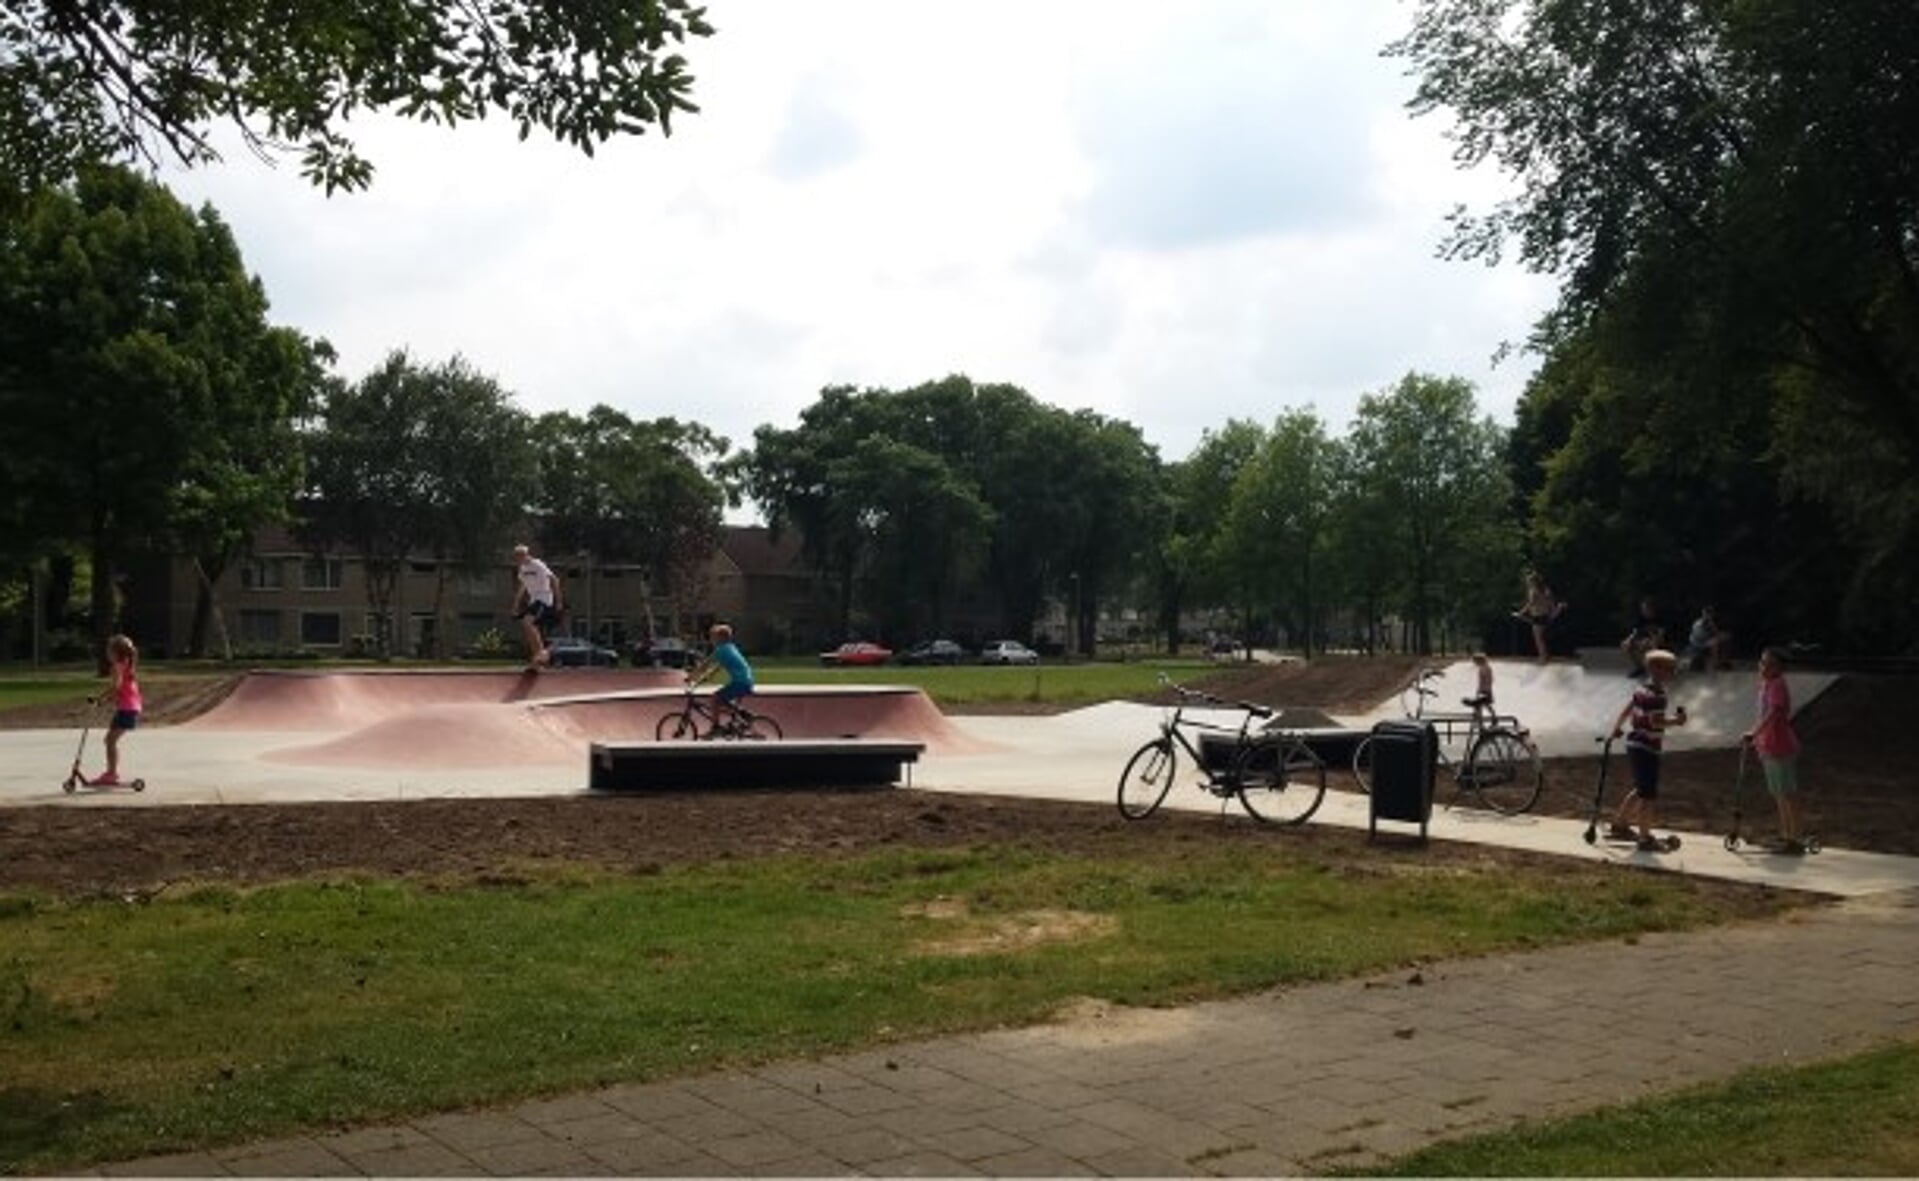 Onder meer in het gebied rond het skatepark in Boxtel Oost wordt overlast gemeld.